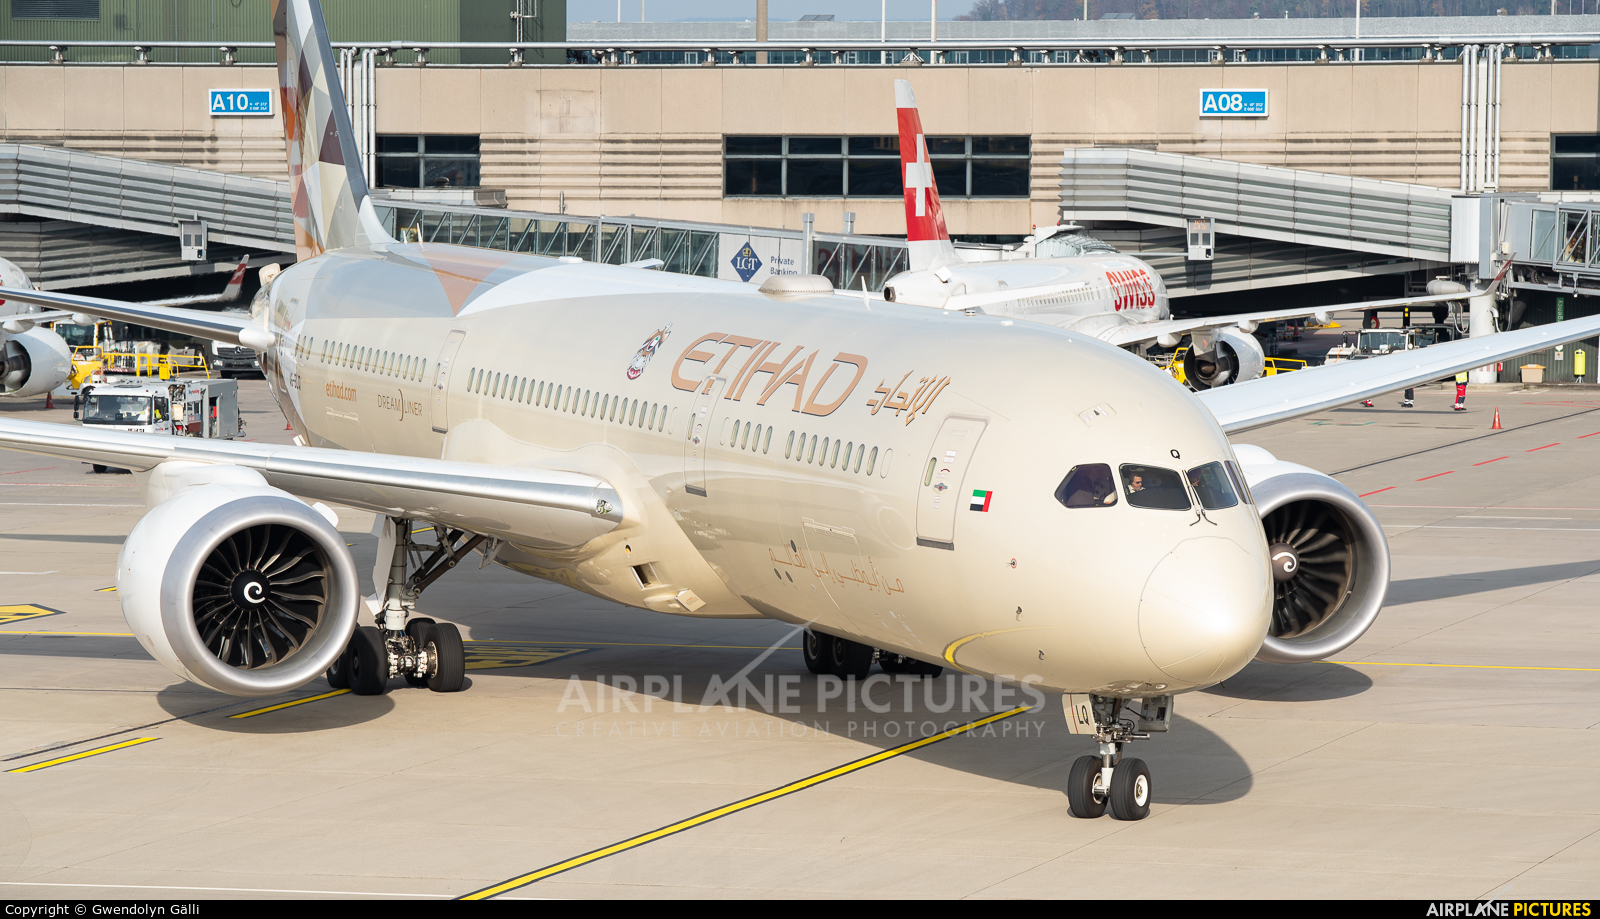 Etihad Airways A6-BLQ aircraft at Zurich